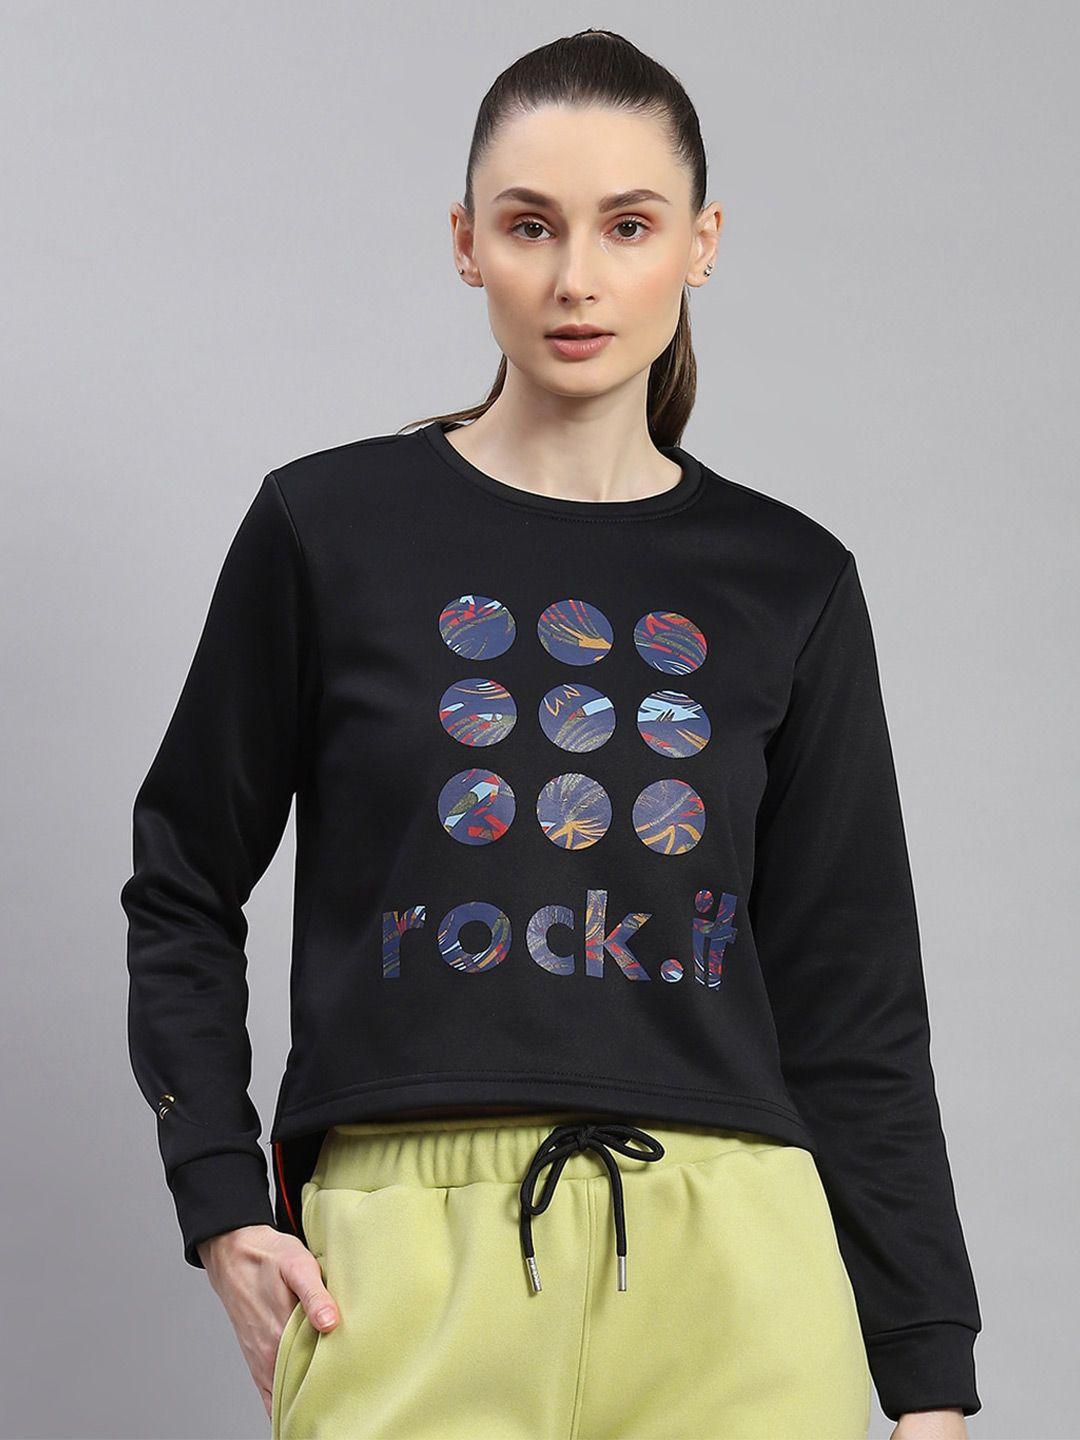 rock.it graphic printed sweatshirt